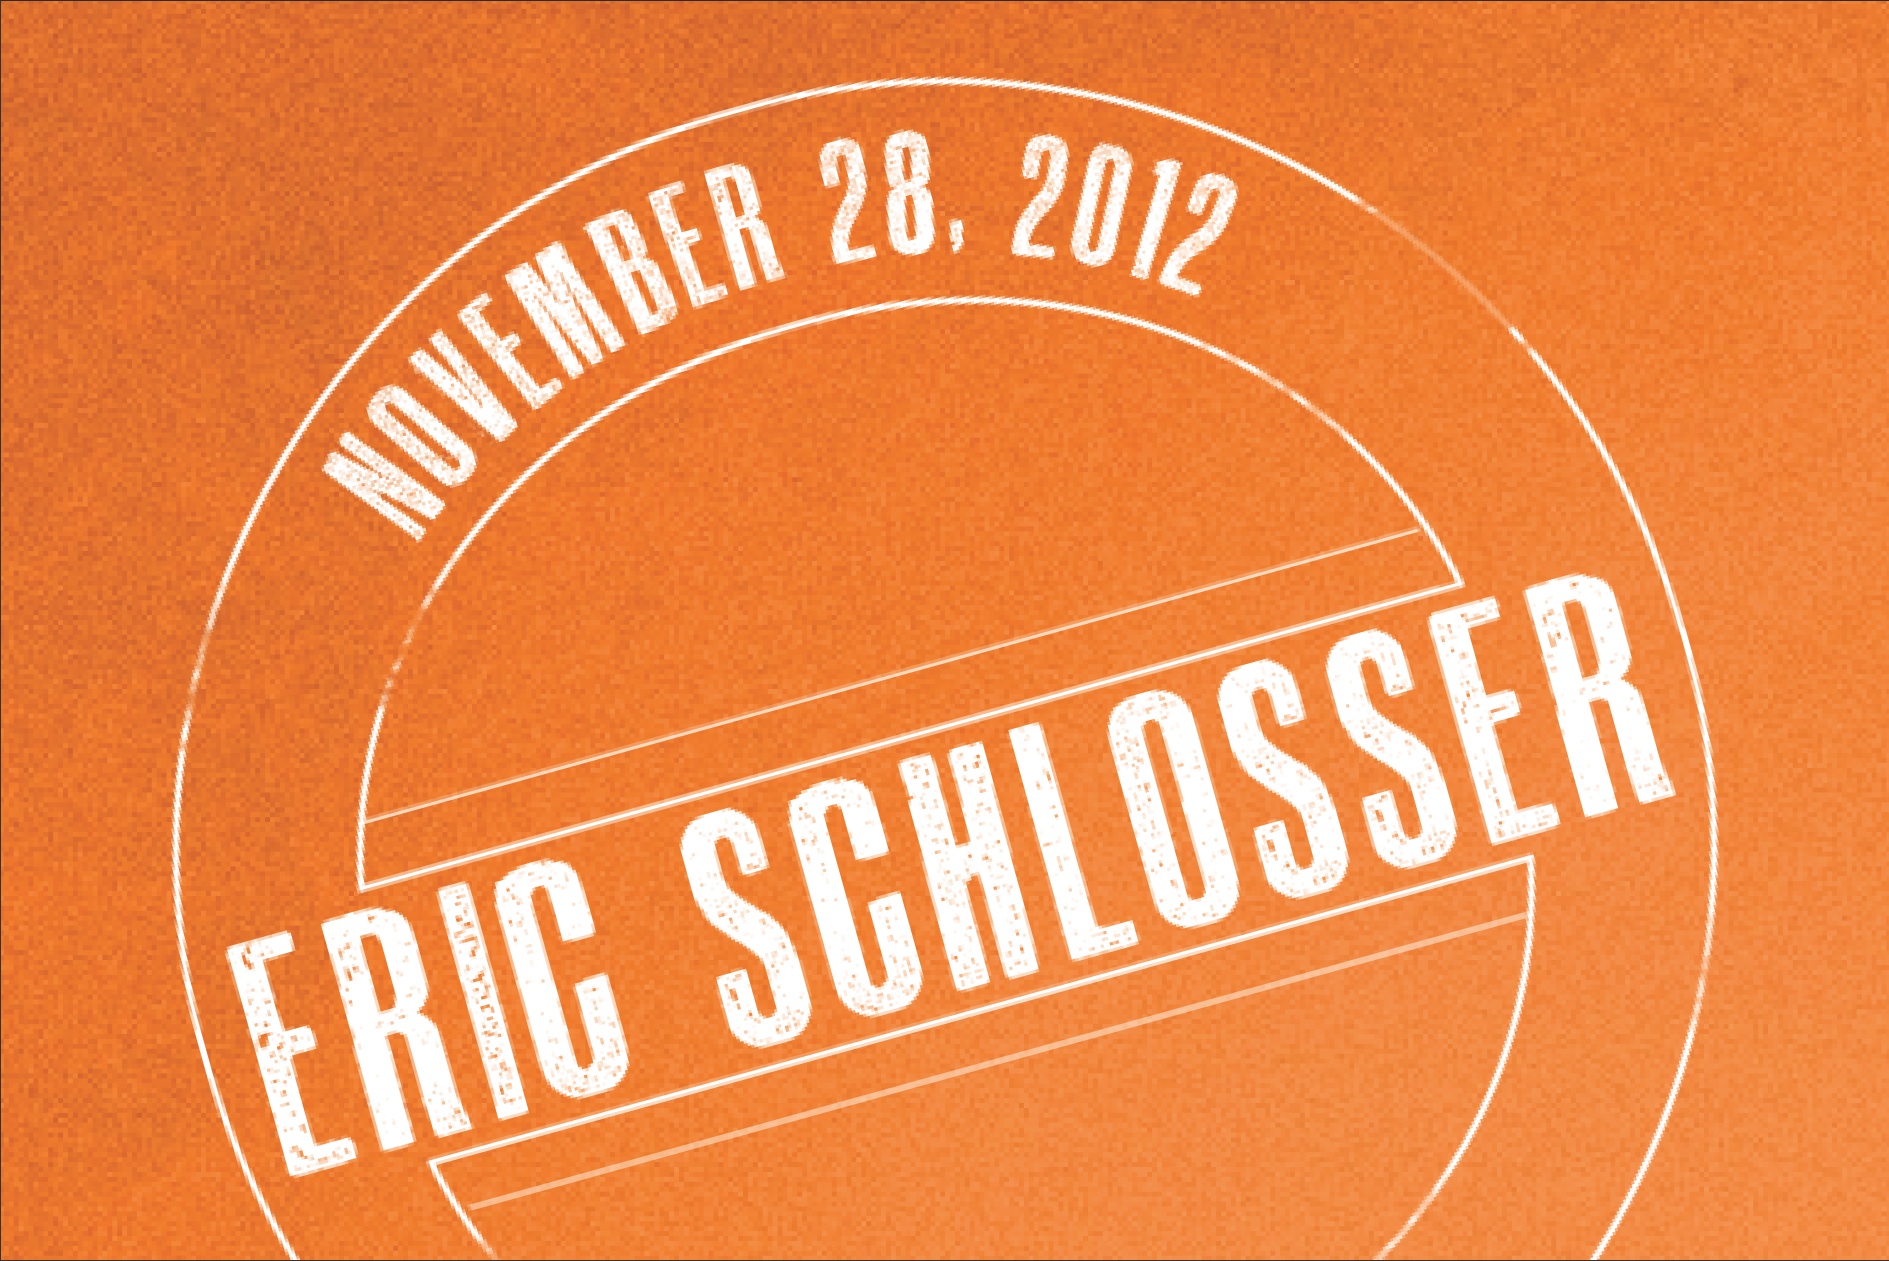 WORLDWISE Arts & Humanities Dean's Lecture Series: Eric Schlosser In Conversation